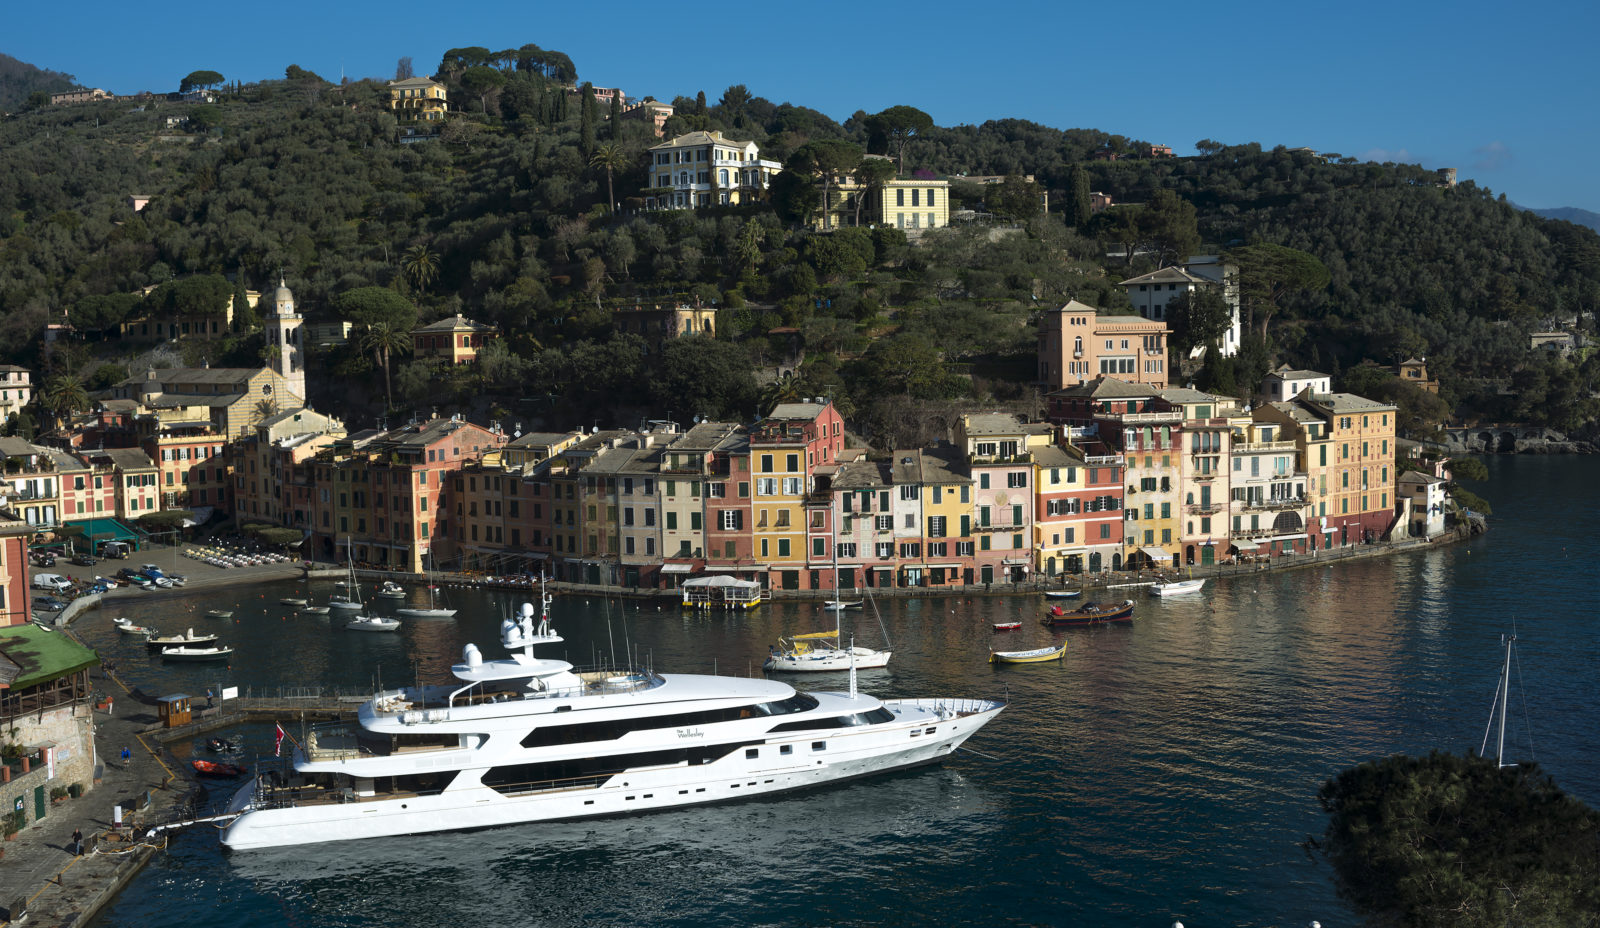 The Wellesley Yacht In Portofino Italy